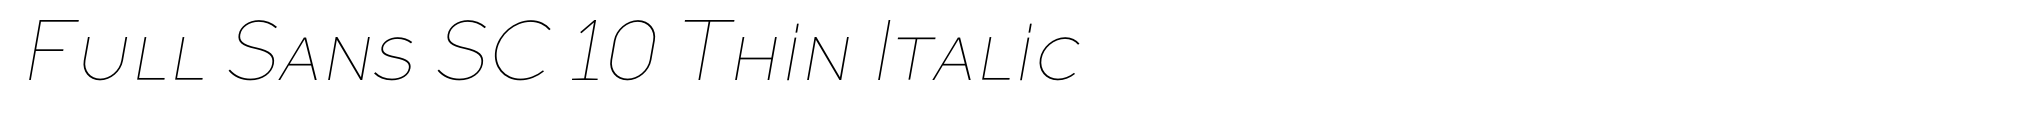 Full Sans SC 10 Thin Italic image